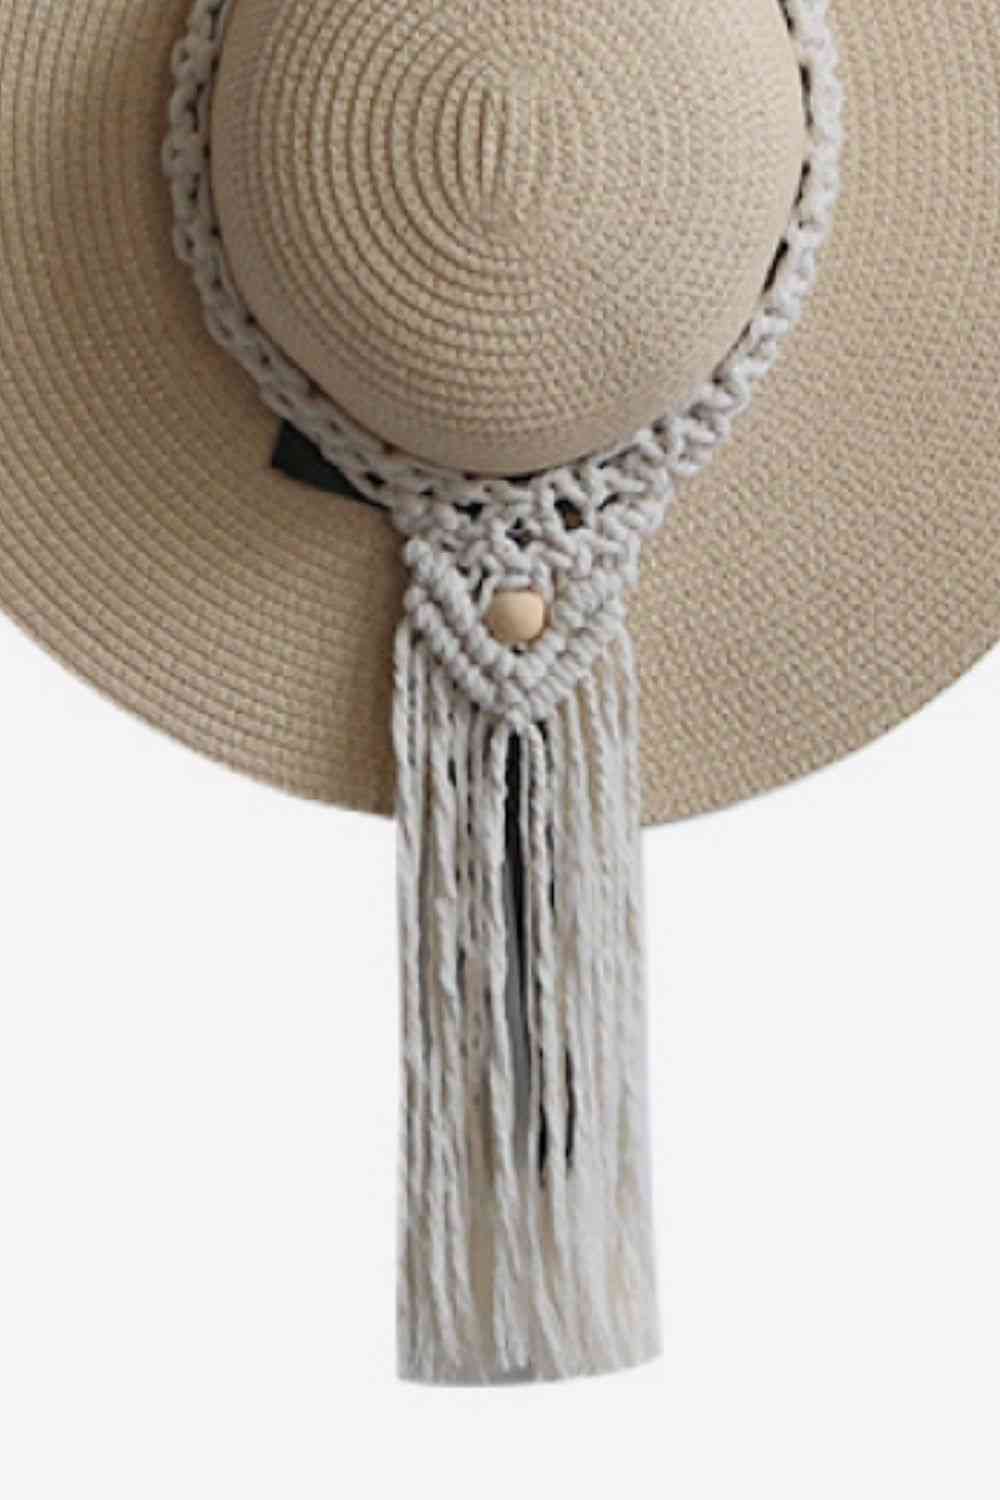 Macrame Single Hat Hanger - BloomBliss.com